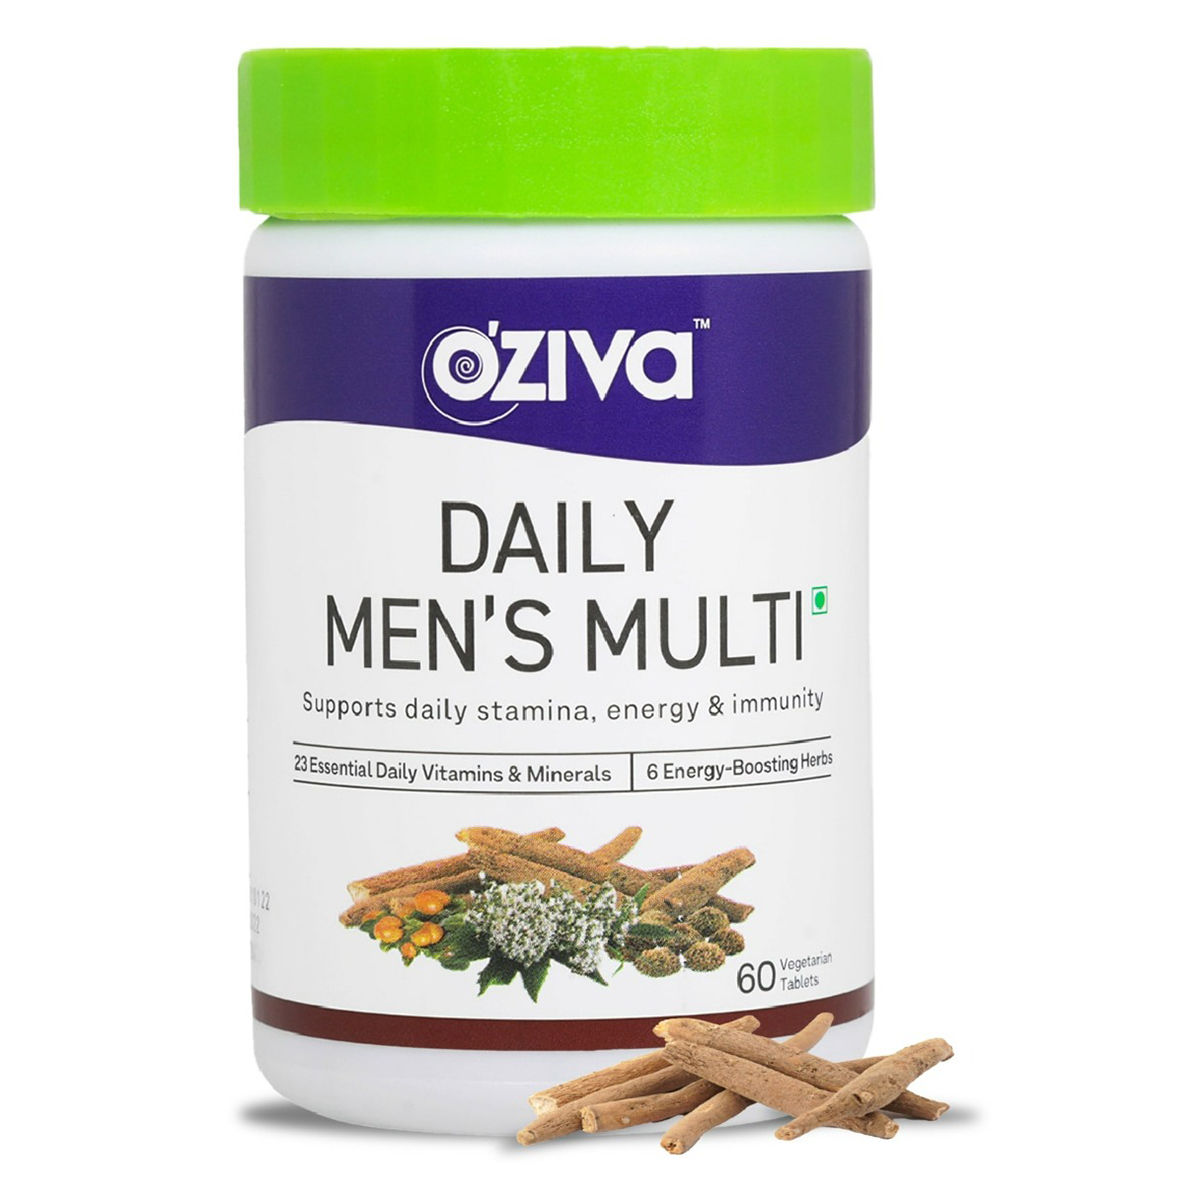 Buy OZiva Daily Men's Multi, 60 Tablets Online